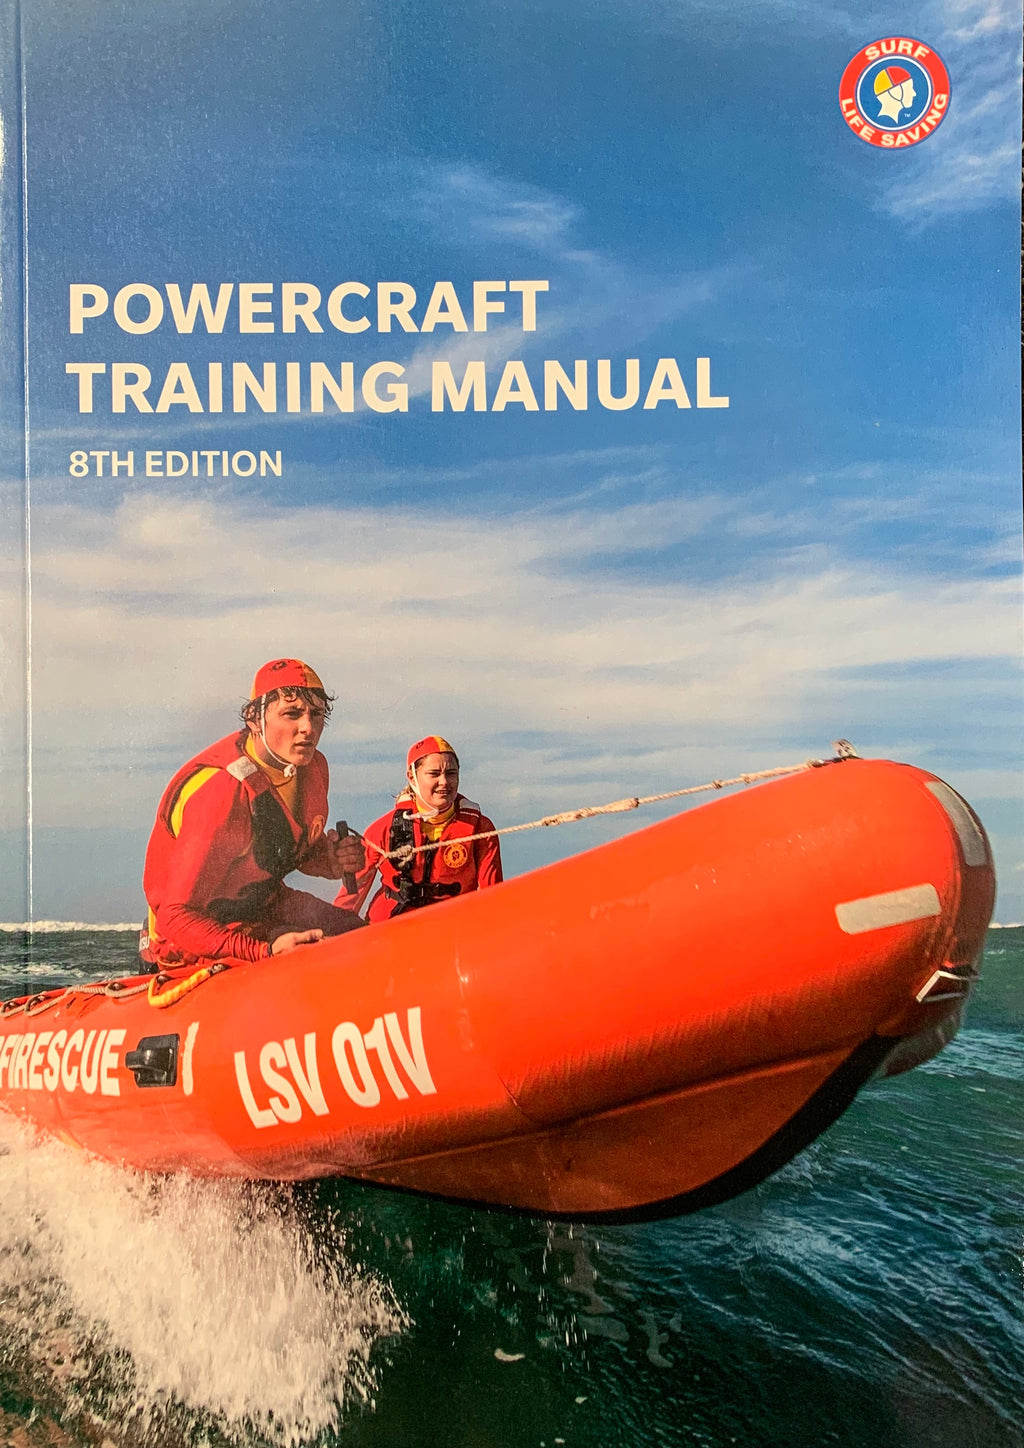 Manual - Powercraft Training Manual 8th Edition